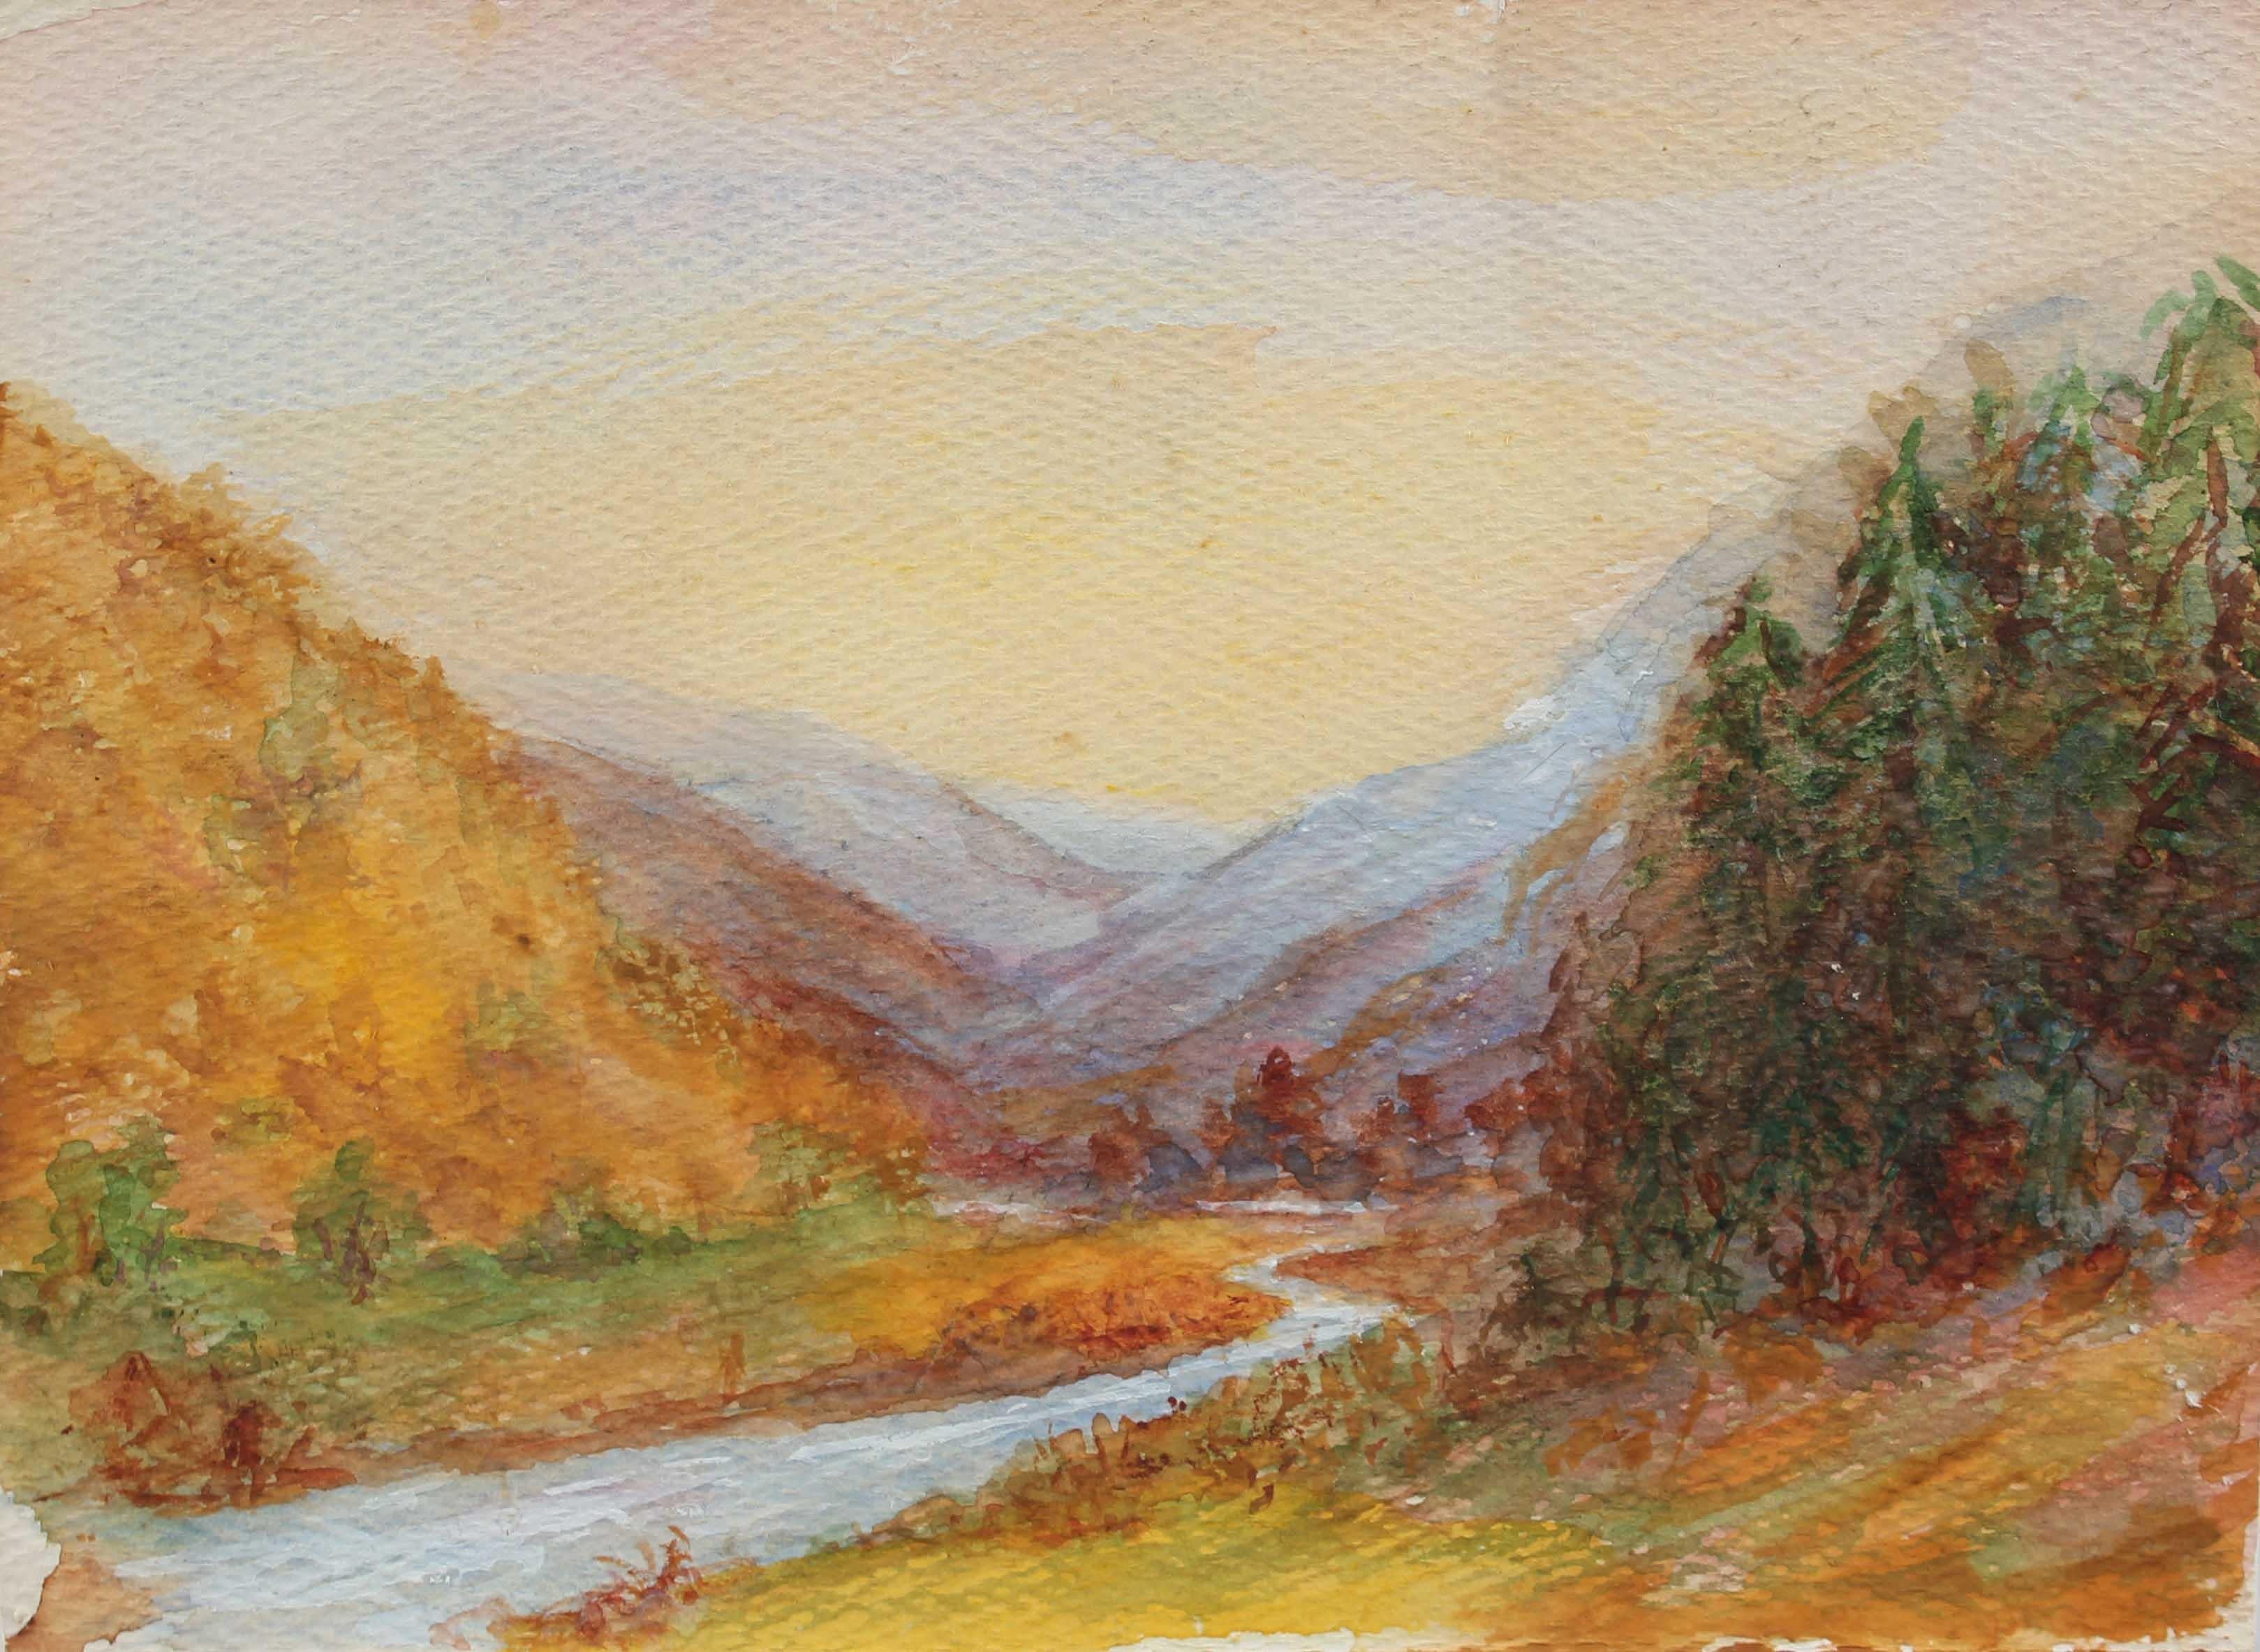 Duncan Davidson Landscape Painting - Impressionist Landscape in Watercolor Painting, Circa 1920s